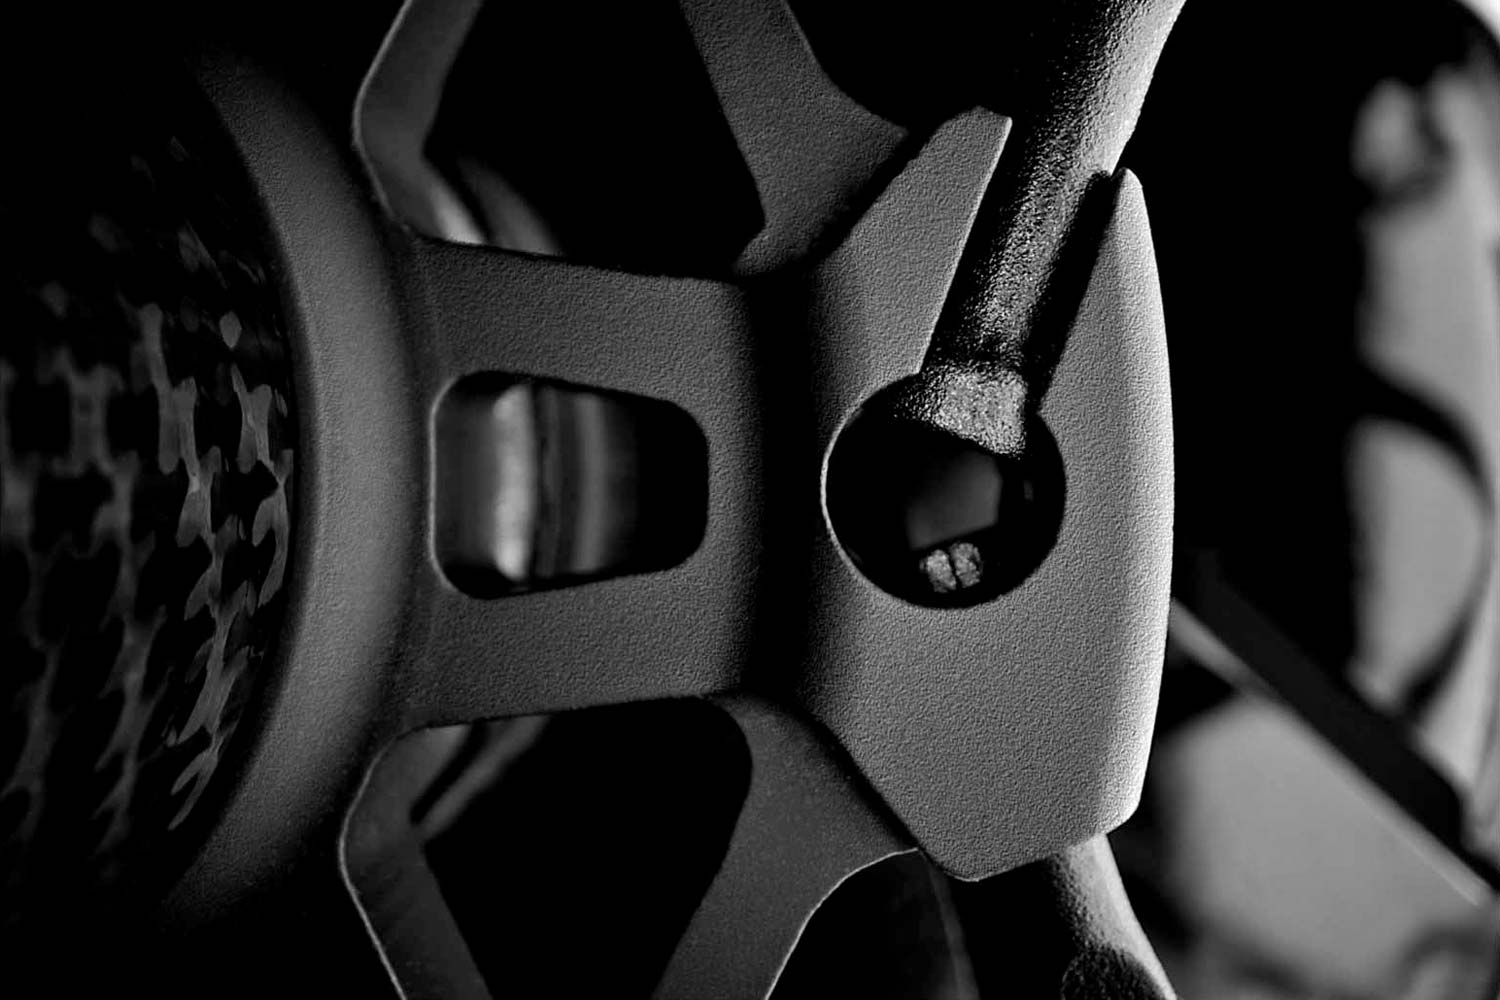 Fulcrum Racing Zero Cmptzn DB alloy road wheels, machined aluminum 19mm internal black label CULT ceramic bearing all road bike wheelset